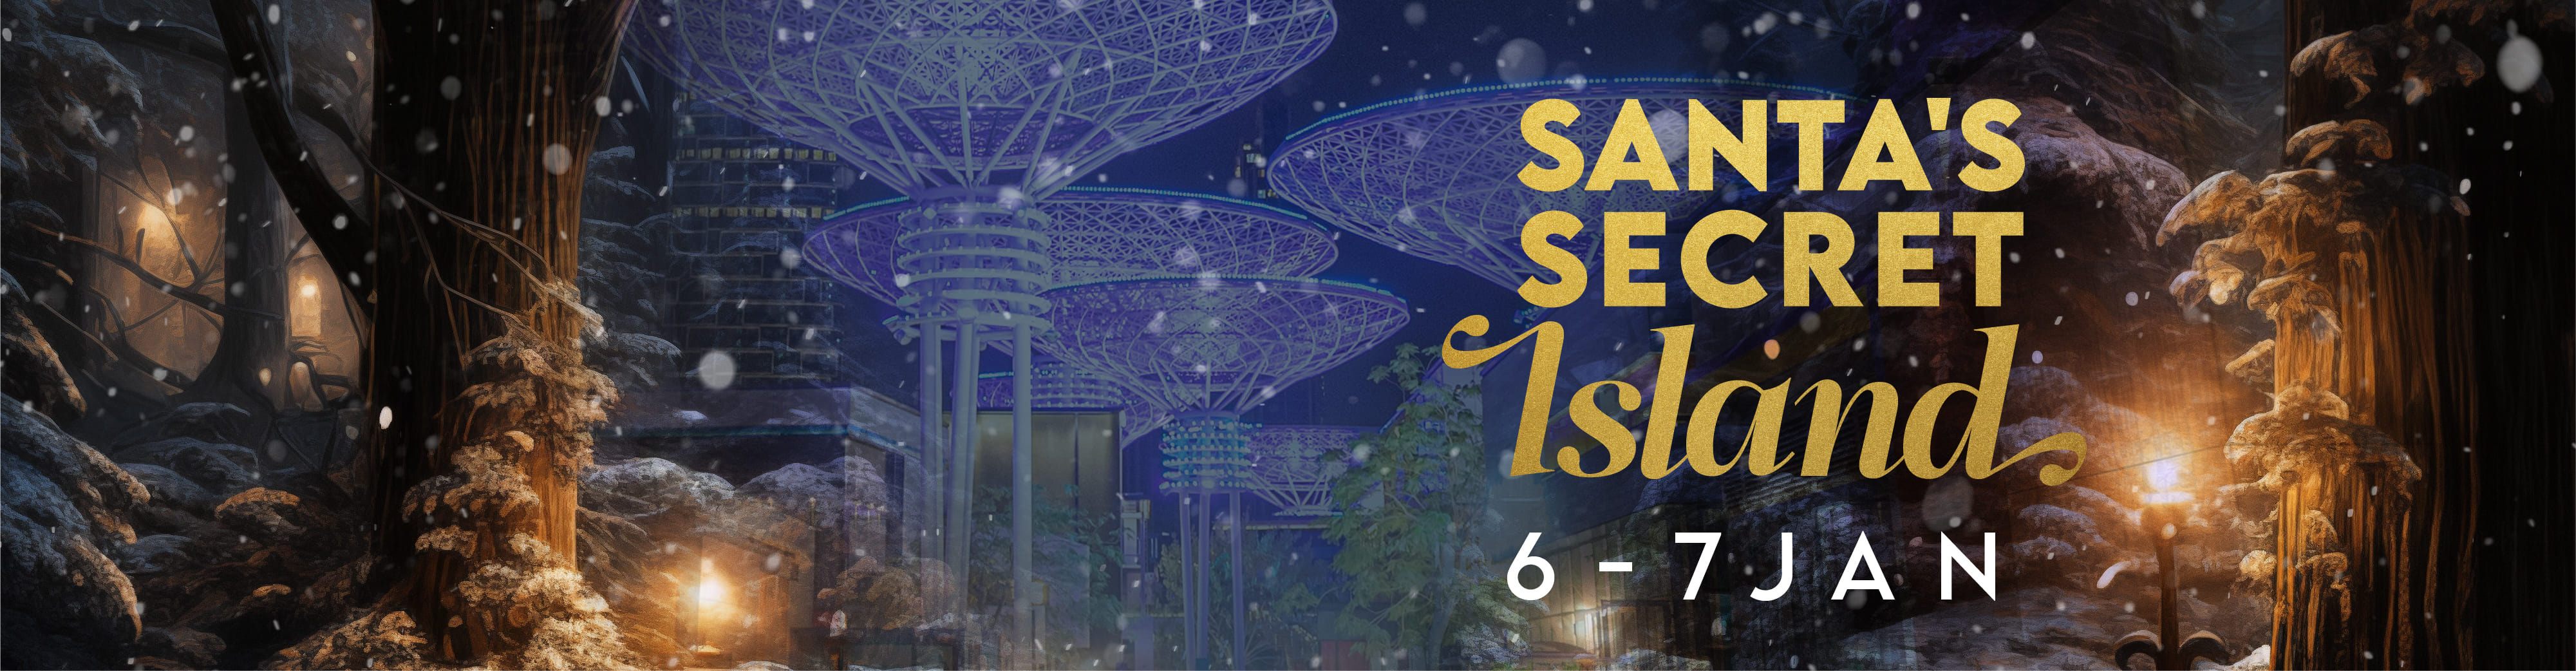 Santa’s Secret Island schedule at Bluewaters